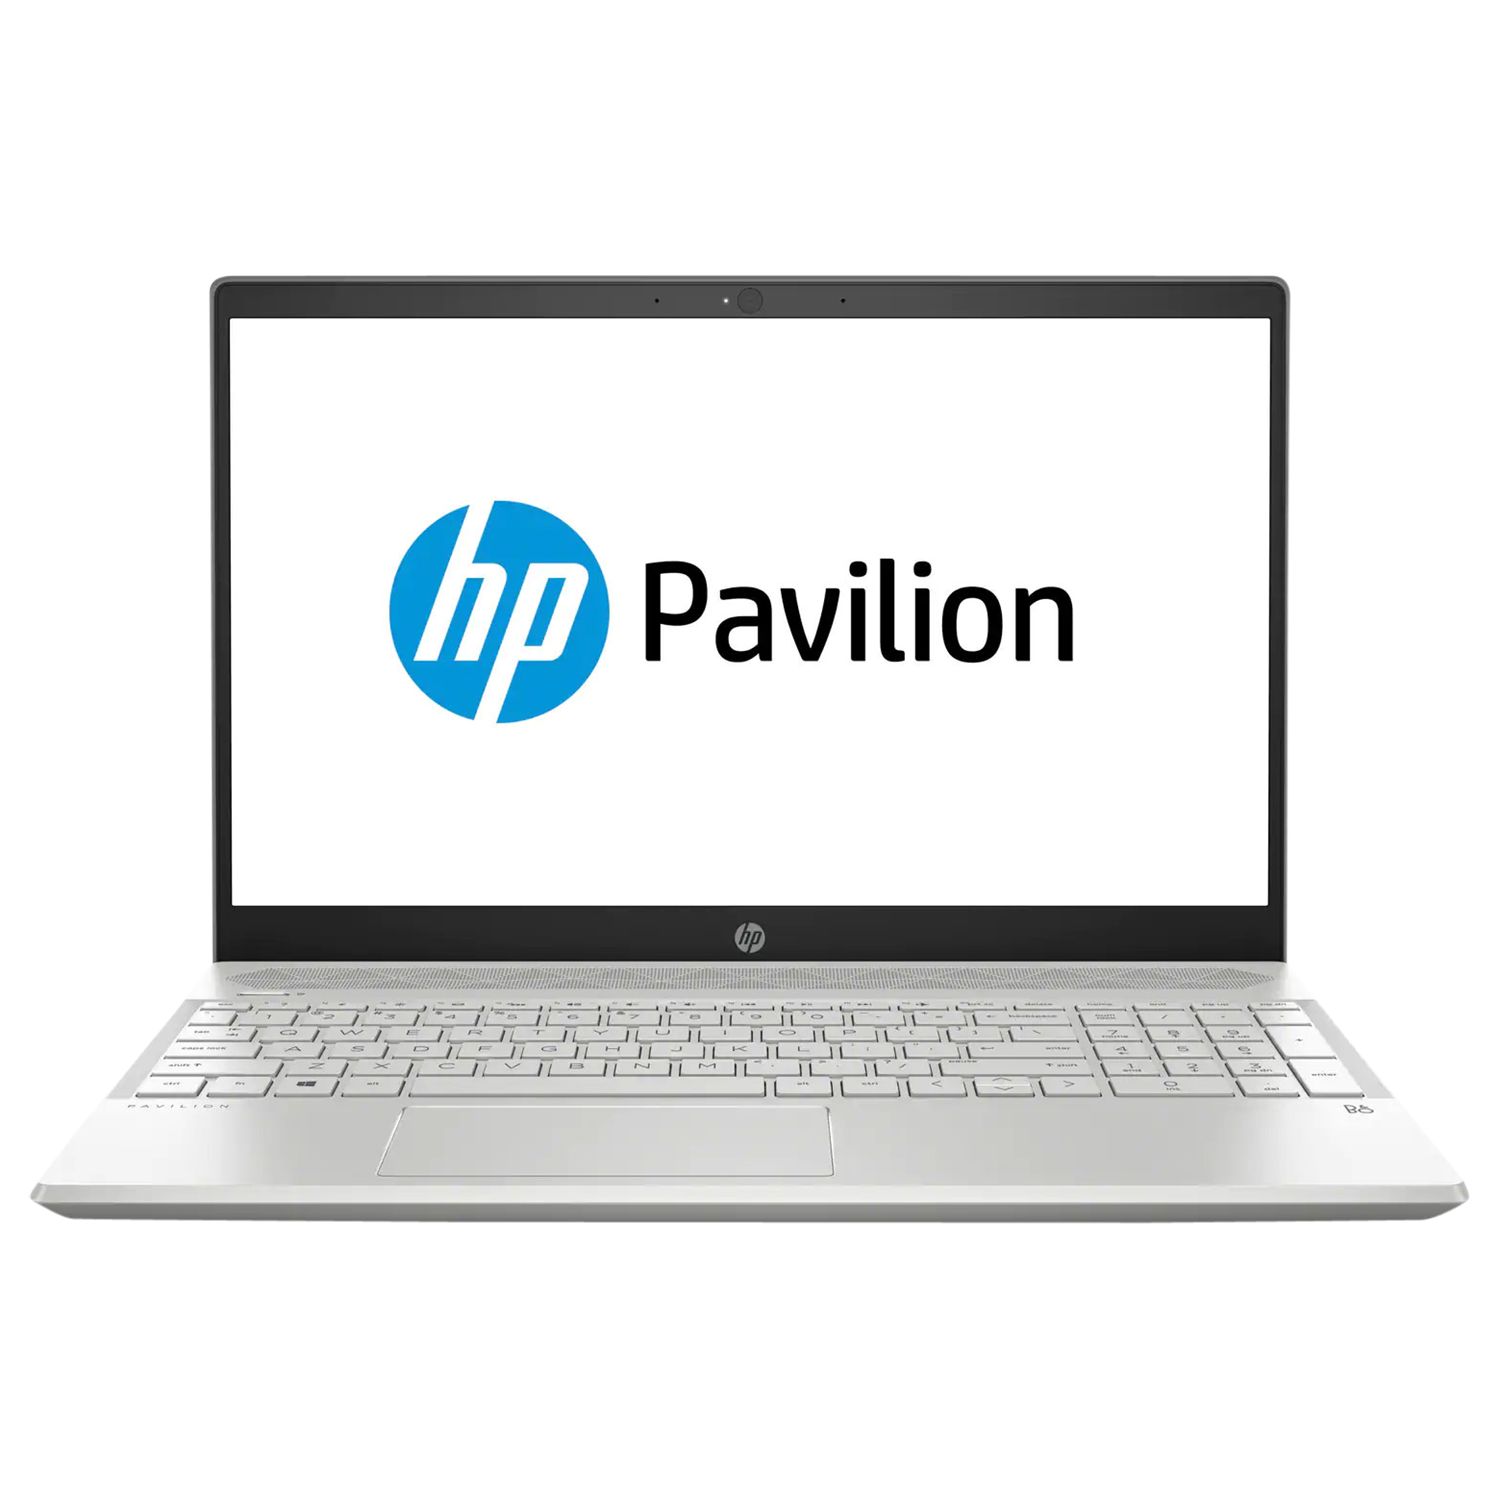 HP Pavilion 15-cs0026na Laptop, Intel Pentium, 4GB RAM, 128GB SSD, 15”, Silver Cover